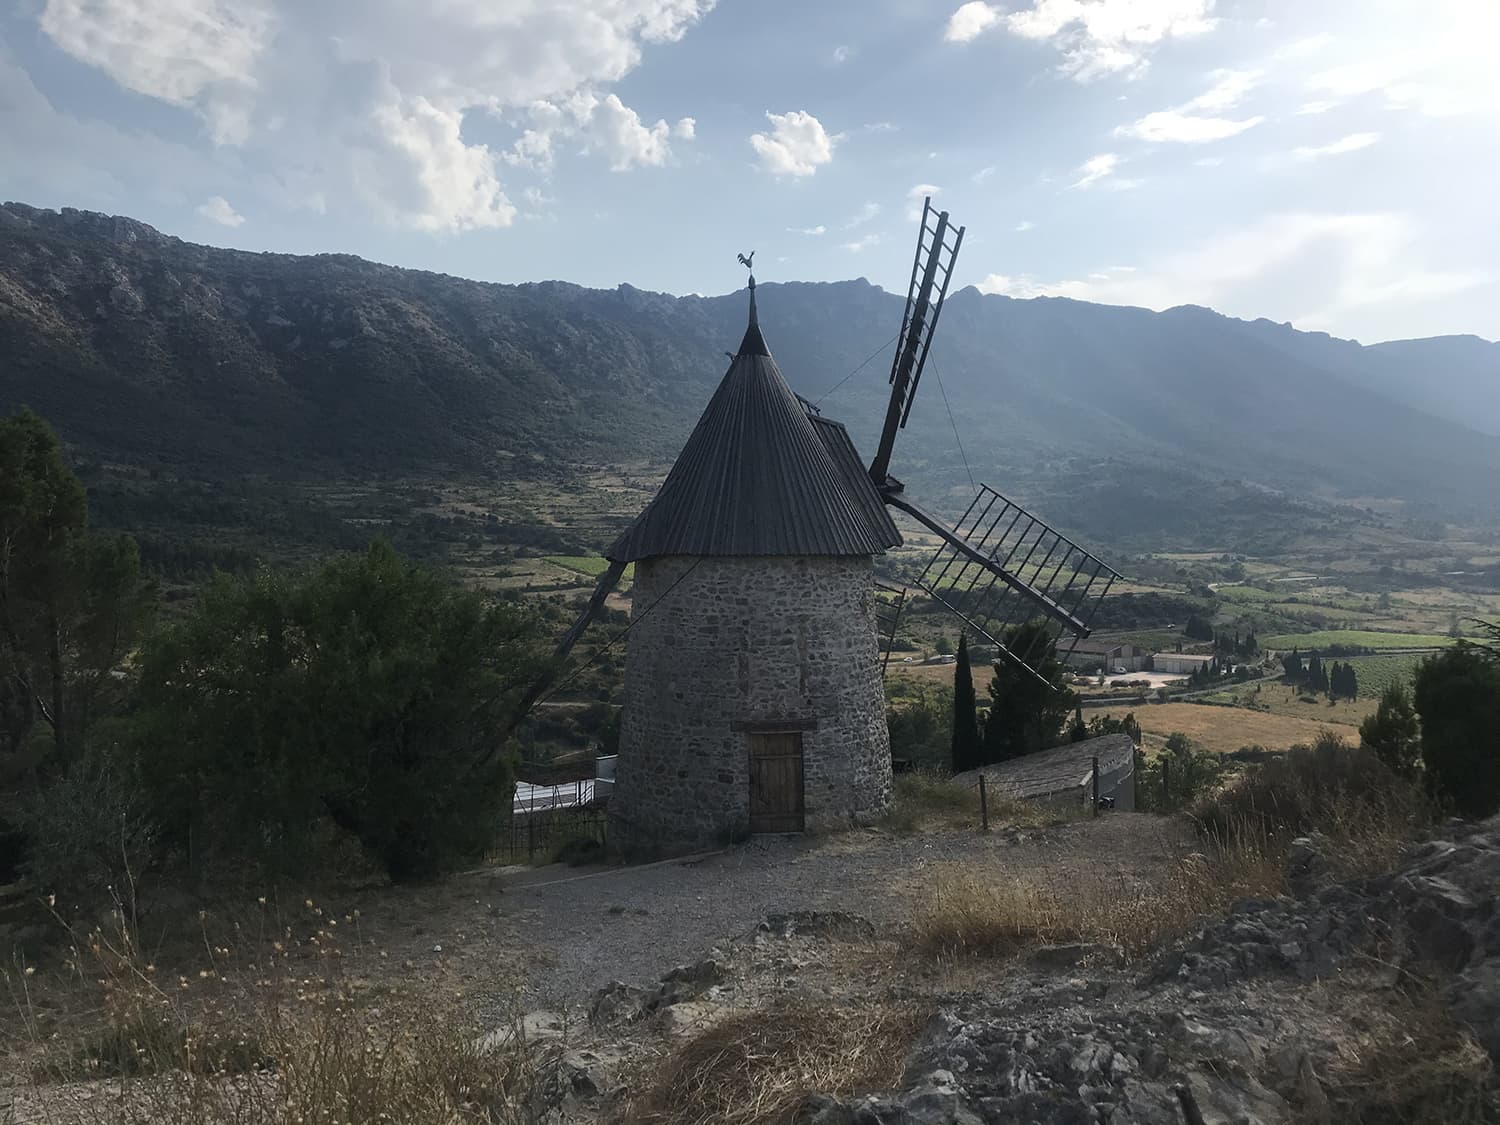 Local windmill